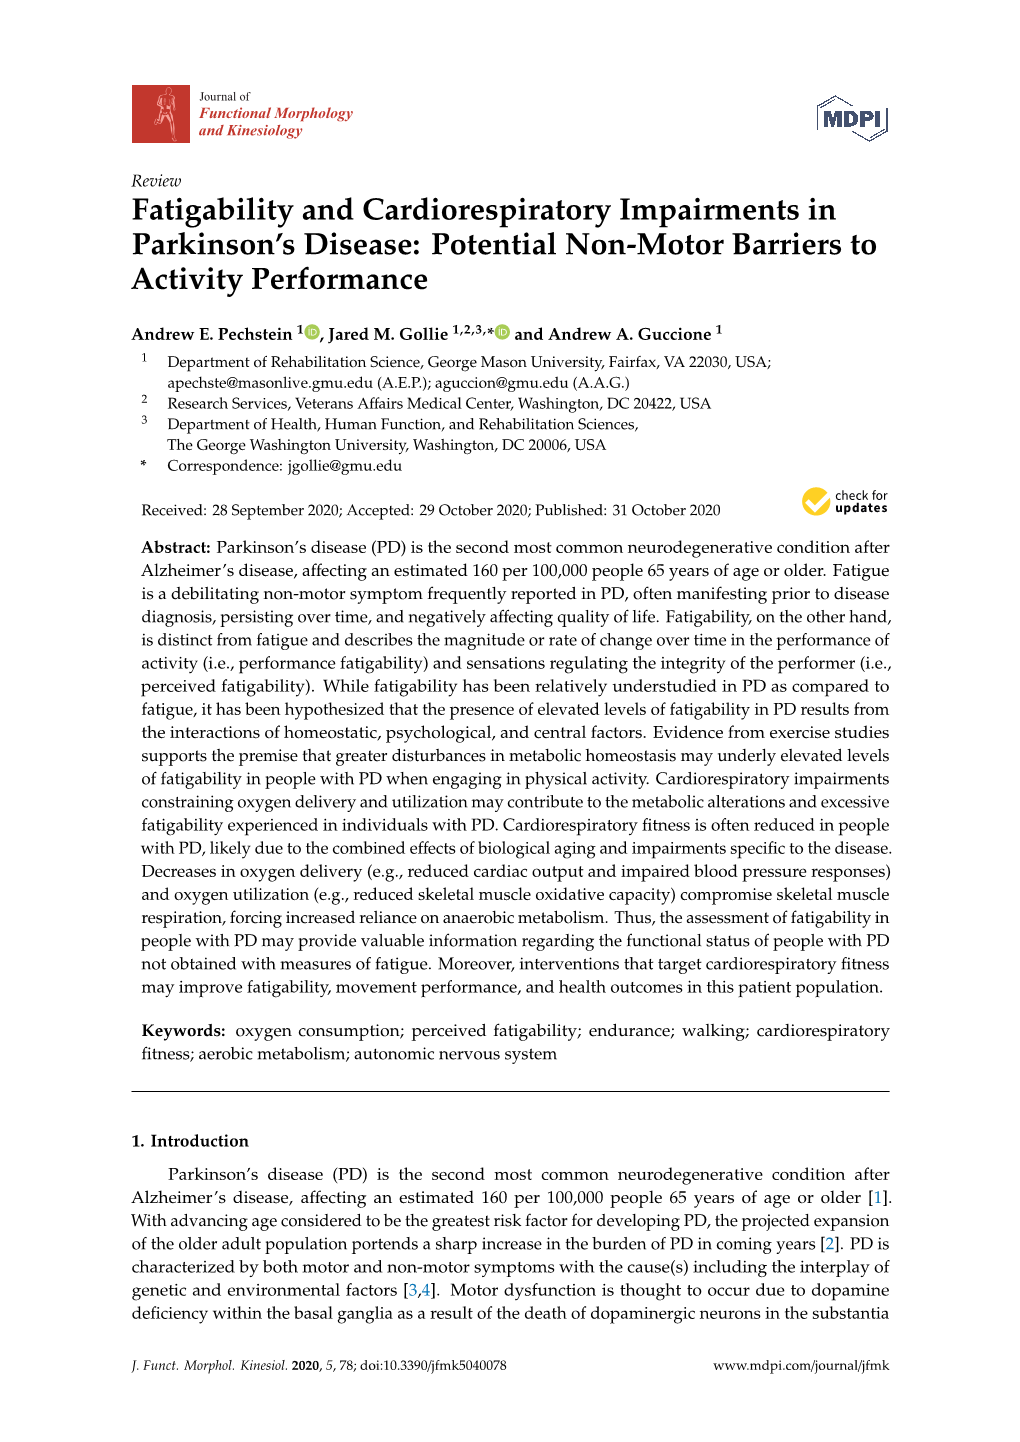 Fatigability and Cardiorespiratory Impairments in Parkinson's Disease